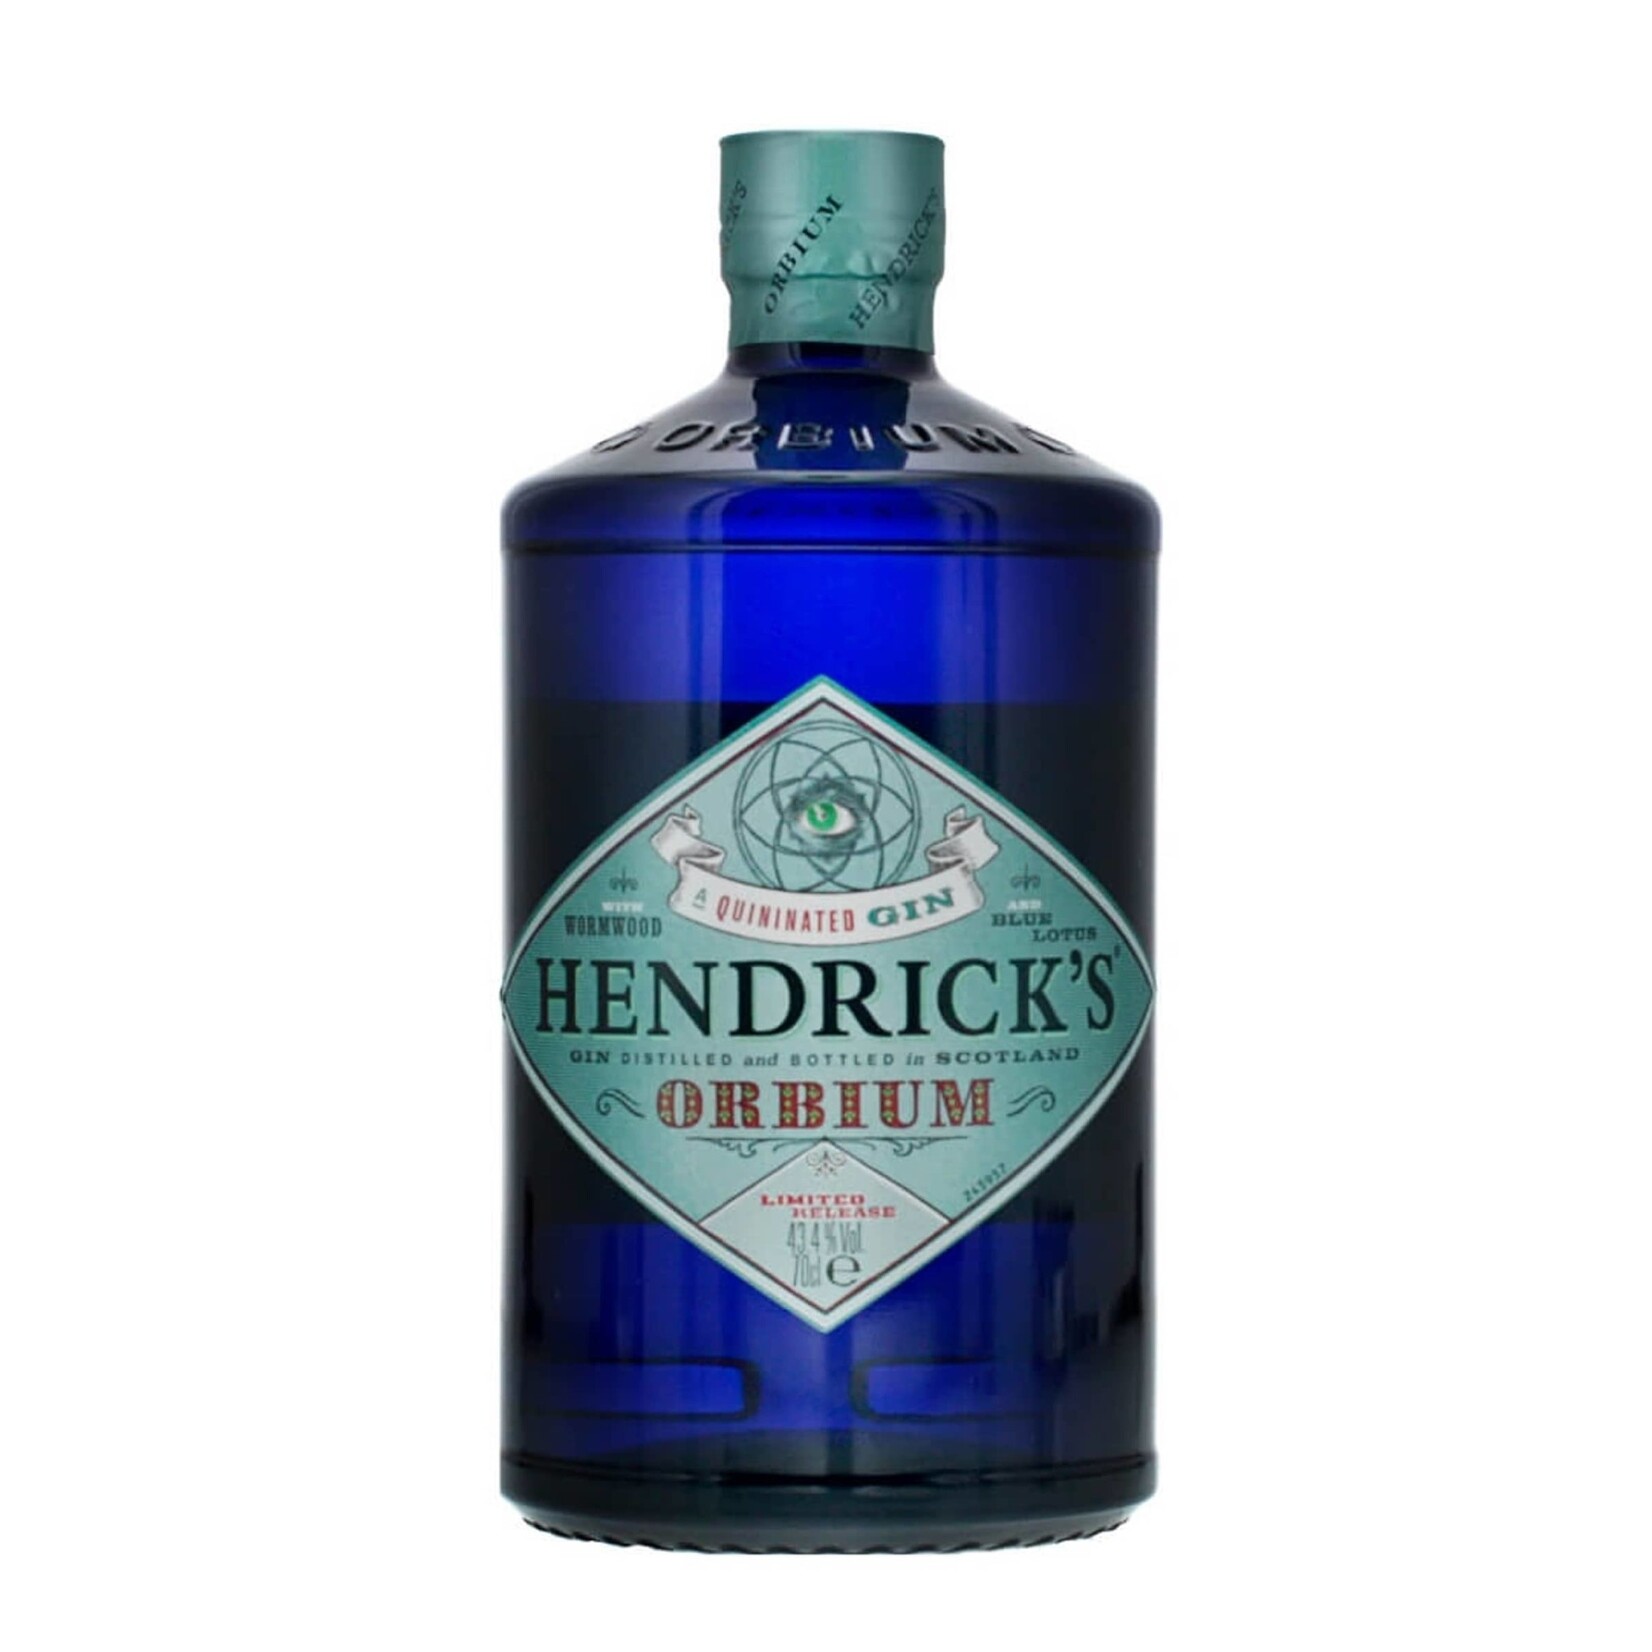 HENDRICK'S HENDRICK'S GIN ORBIUM LIMITED EDITION